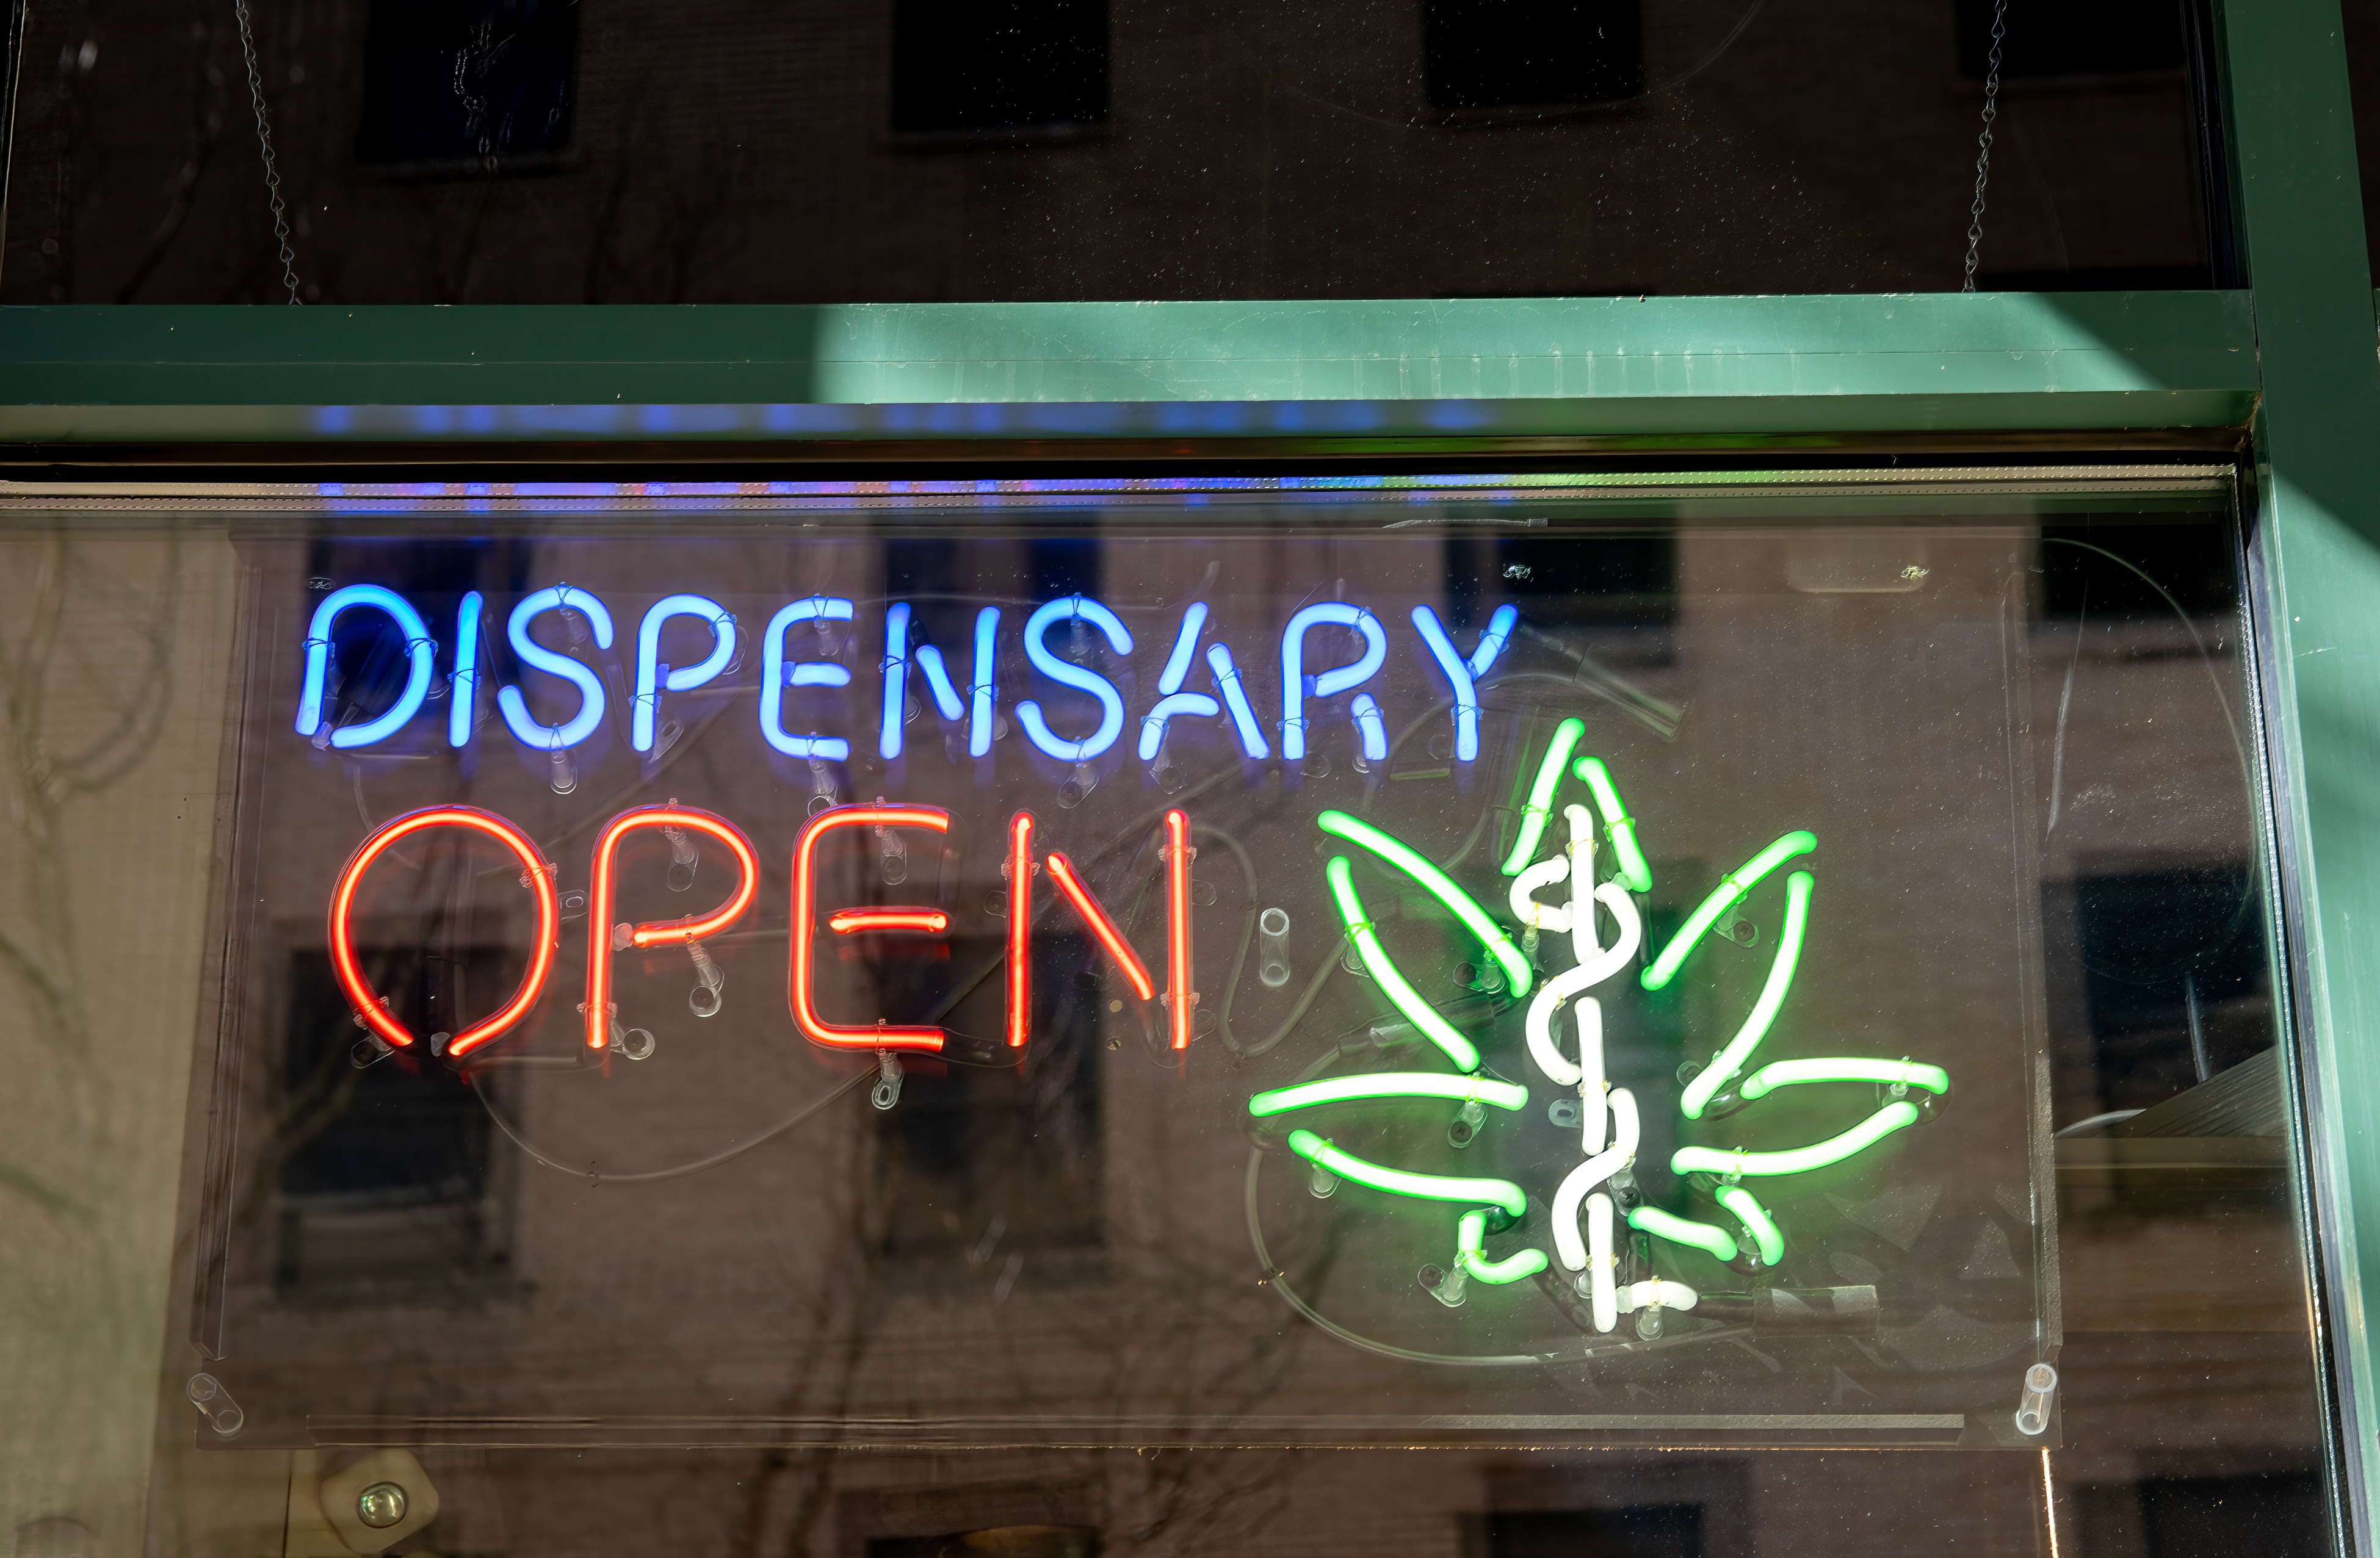 Neon sign advertising legal, medical marijuana dispensary in store window.